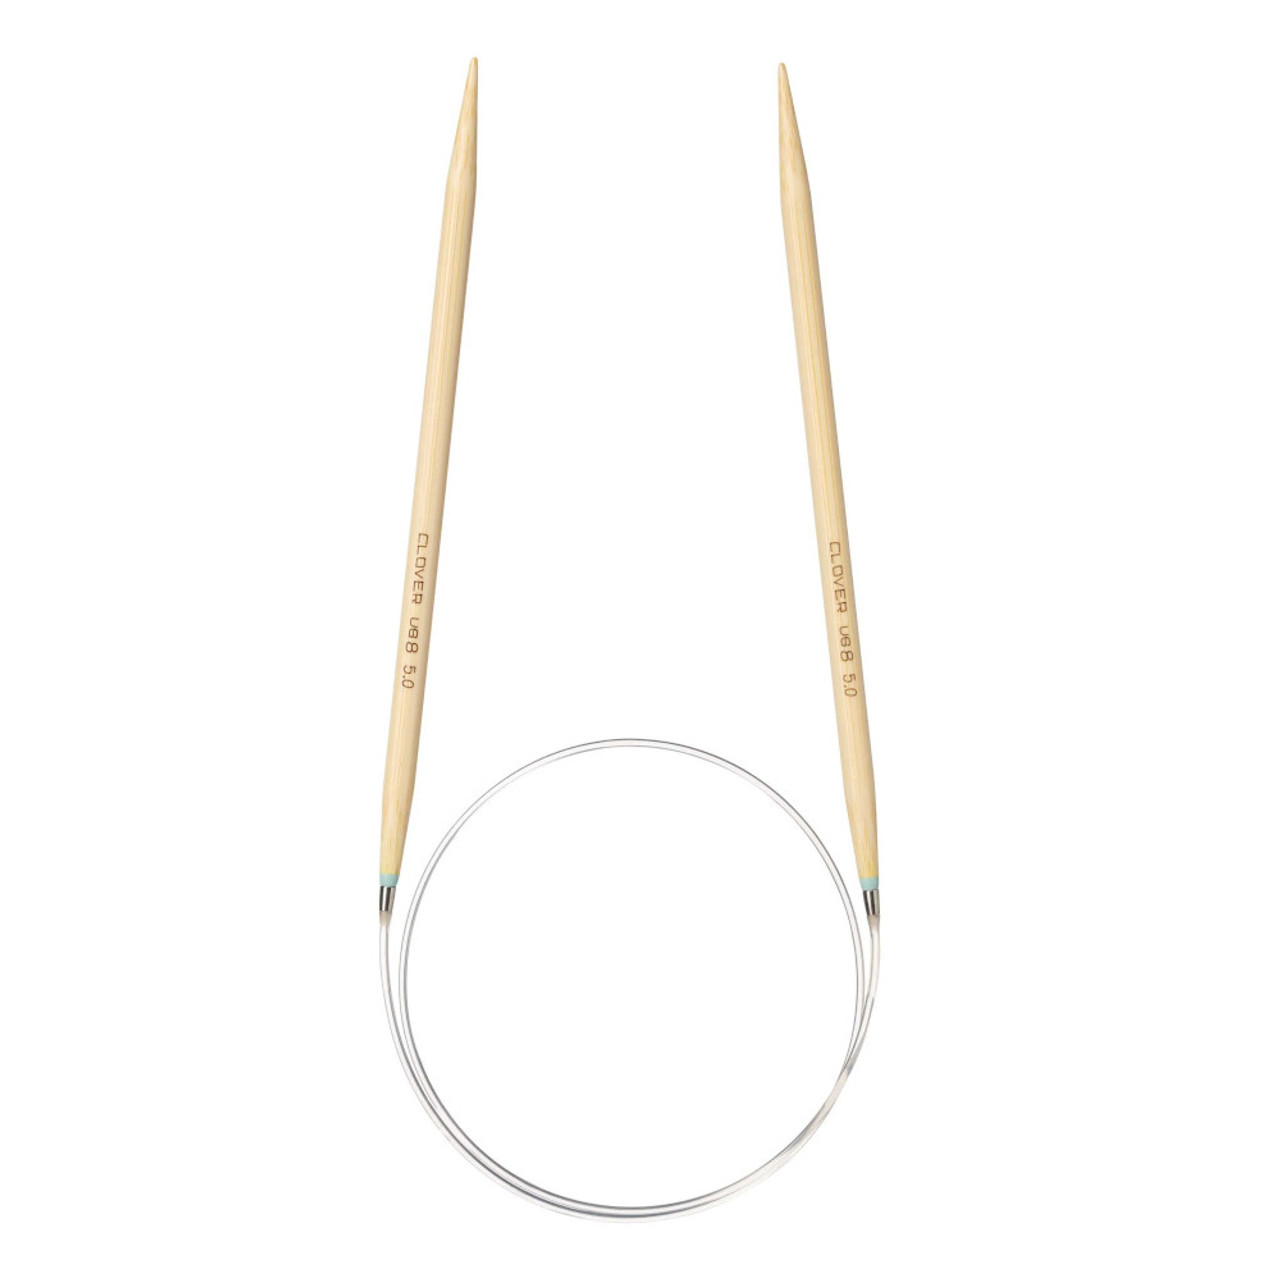 Clover Bamboo Circular Knitting Needles Takumi , 9-Inch Size 3